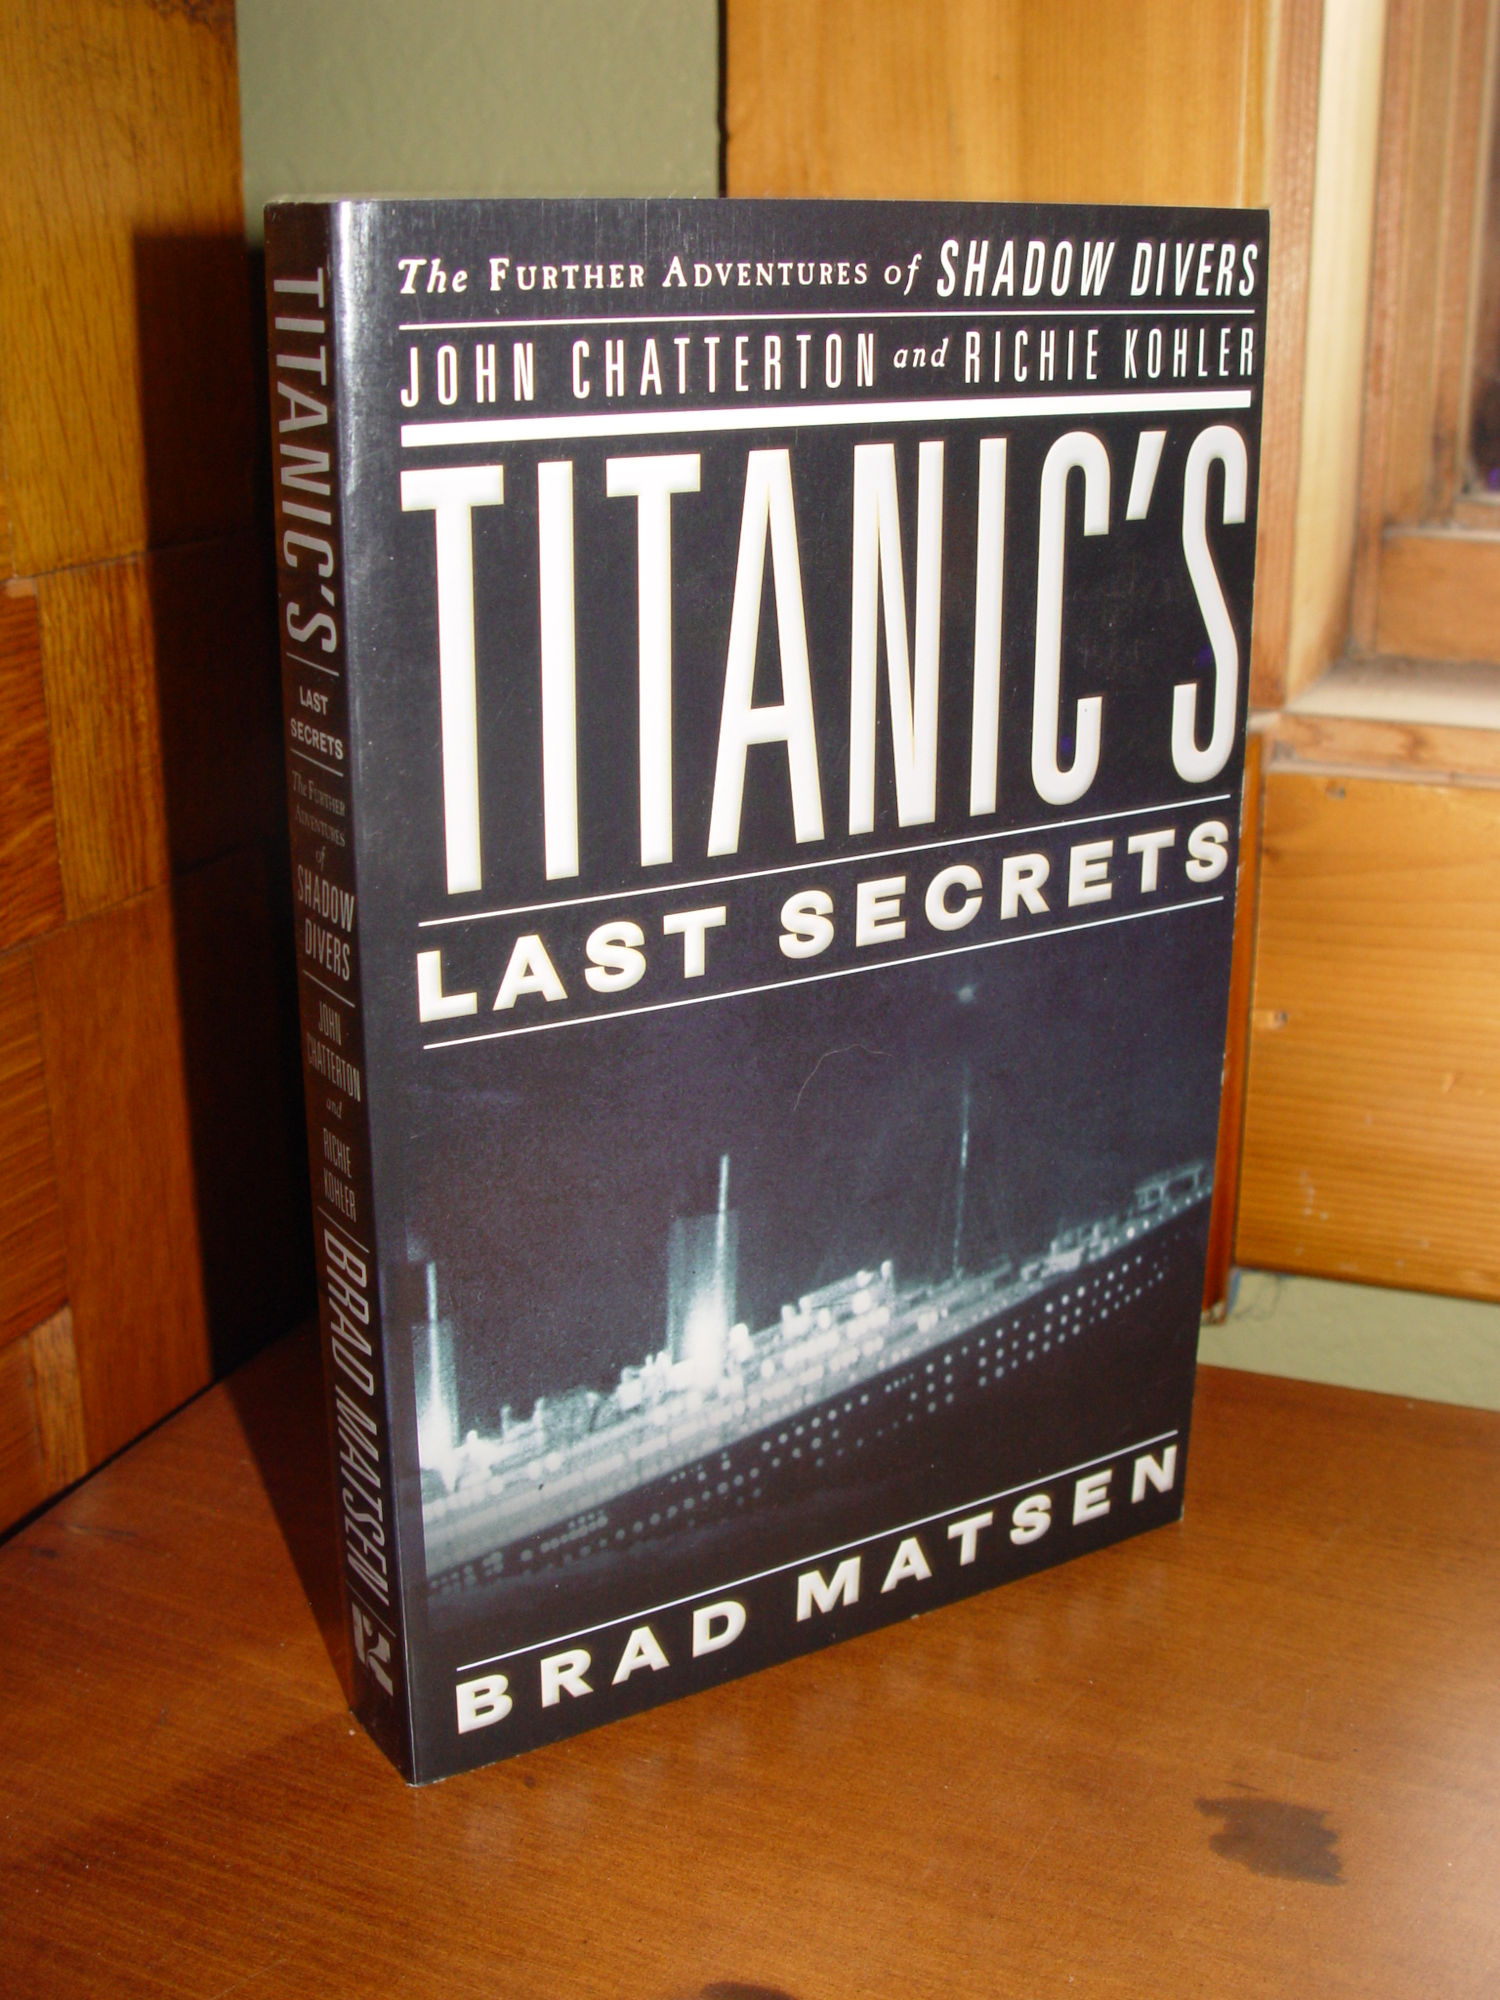 Titanic's Last Secrets Shadow Divers John
                        Chatterton and Richie Kohler 2008 Brad Matsen